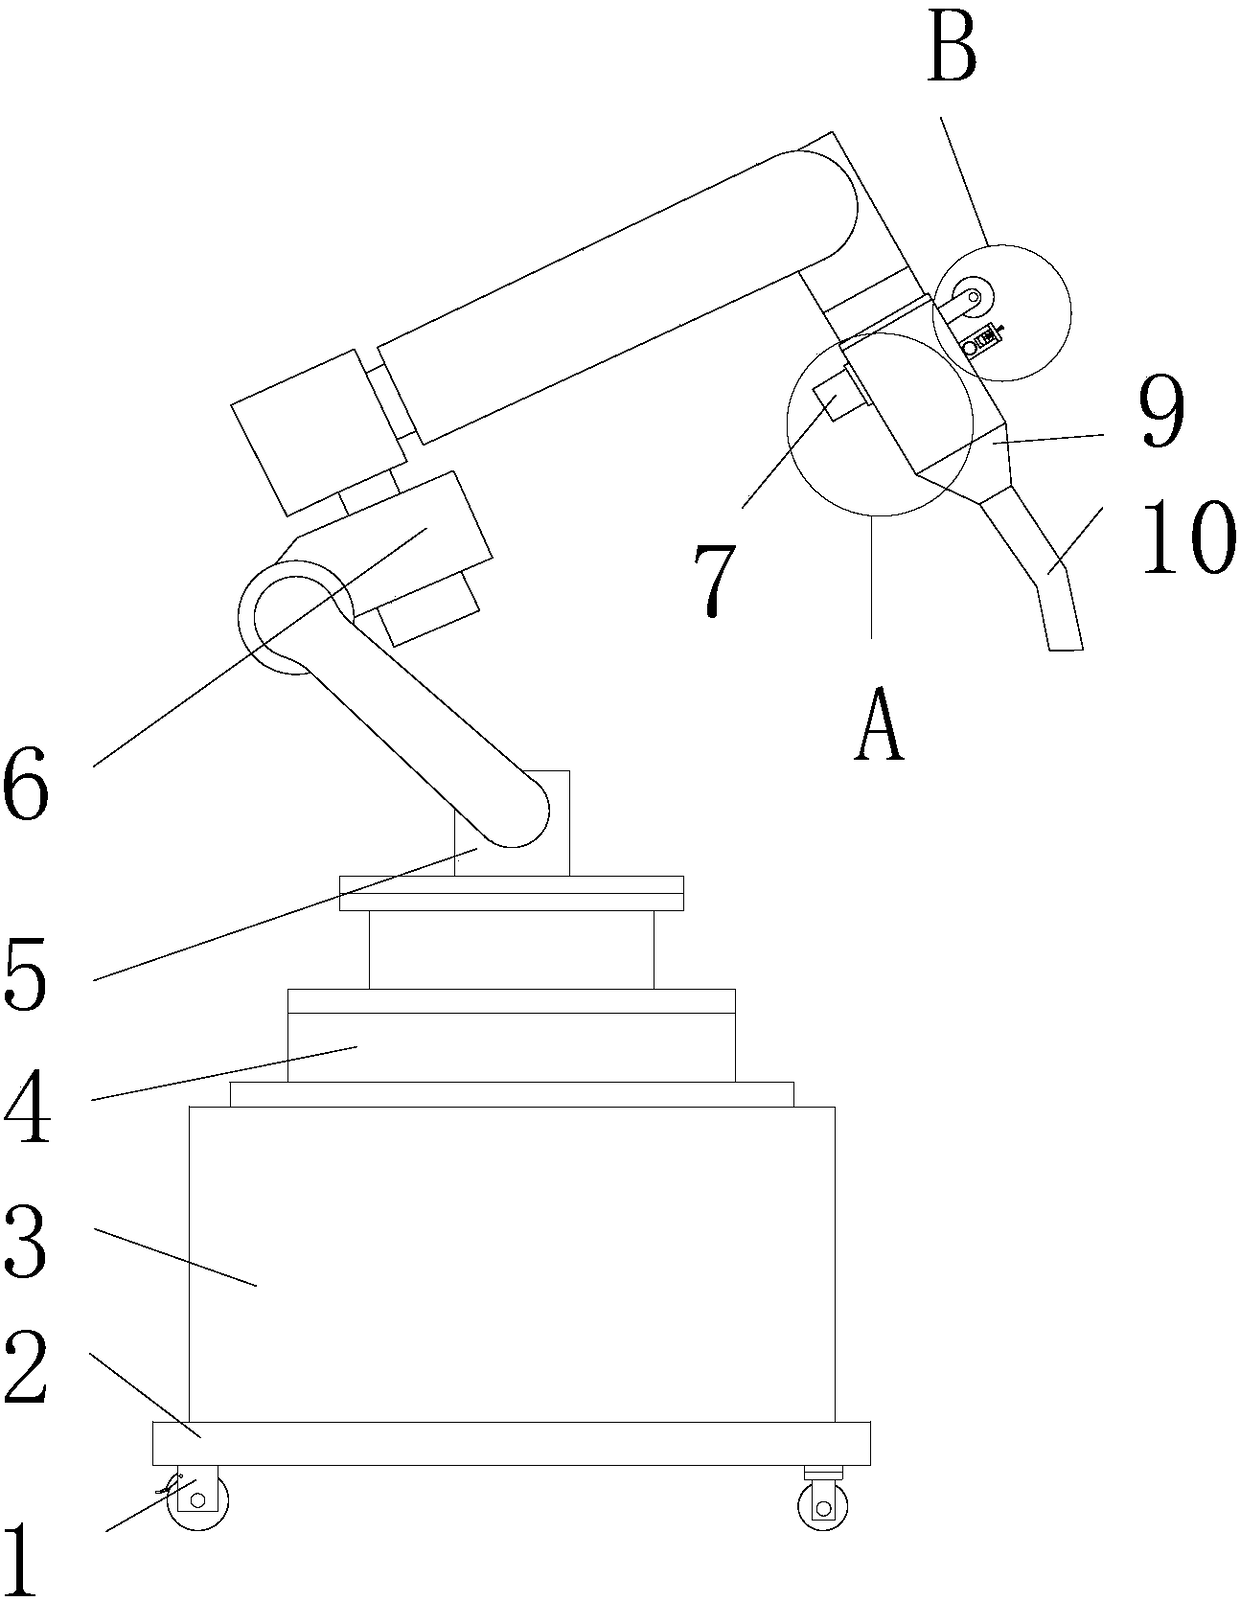 Numerical control four-axis welding manipulator